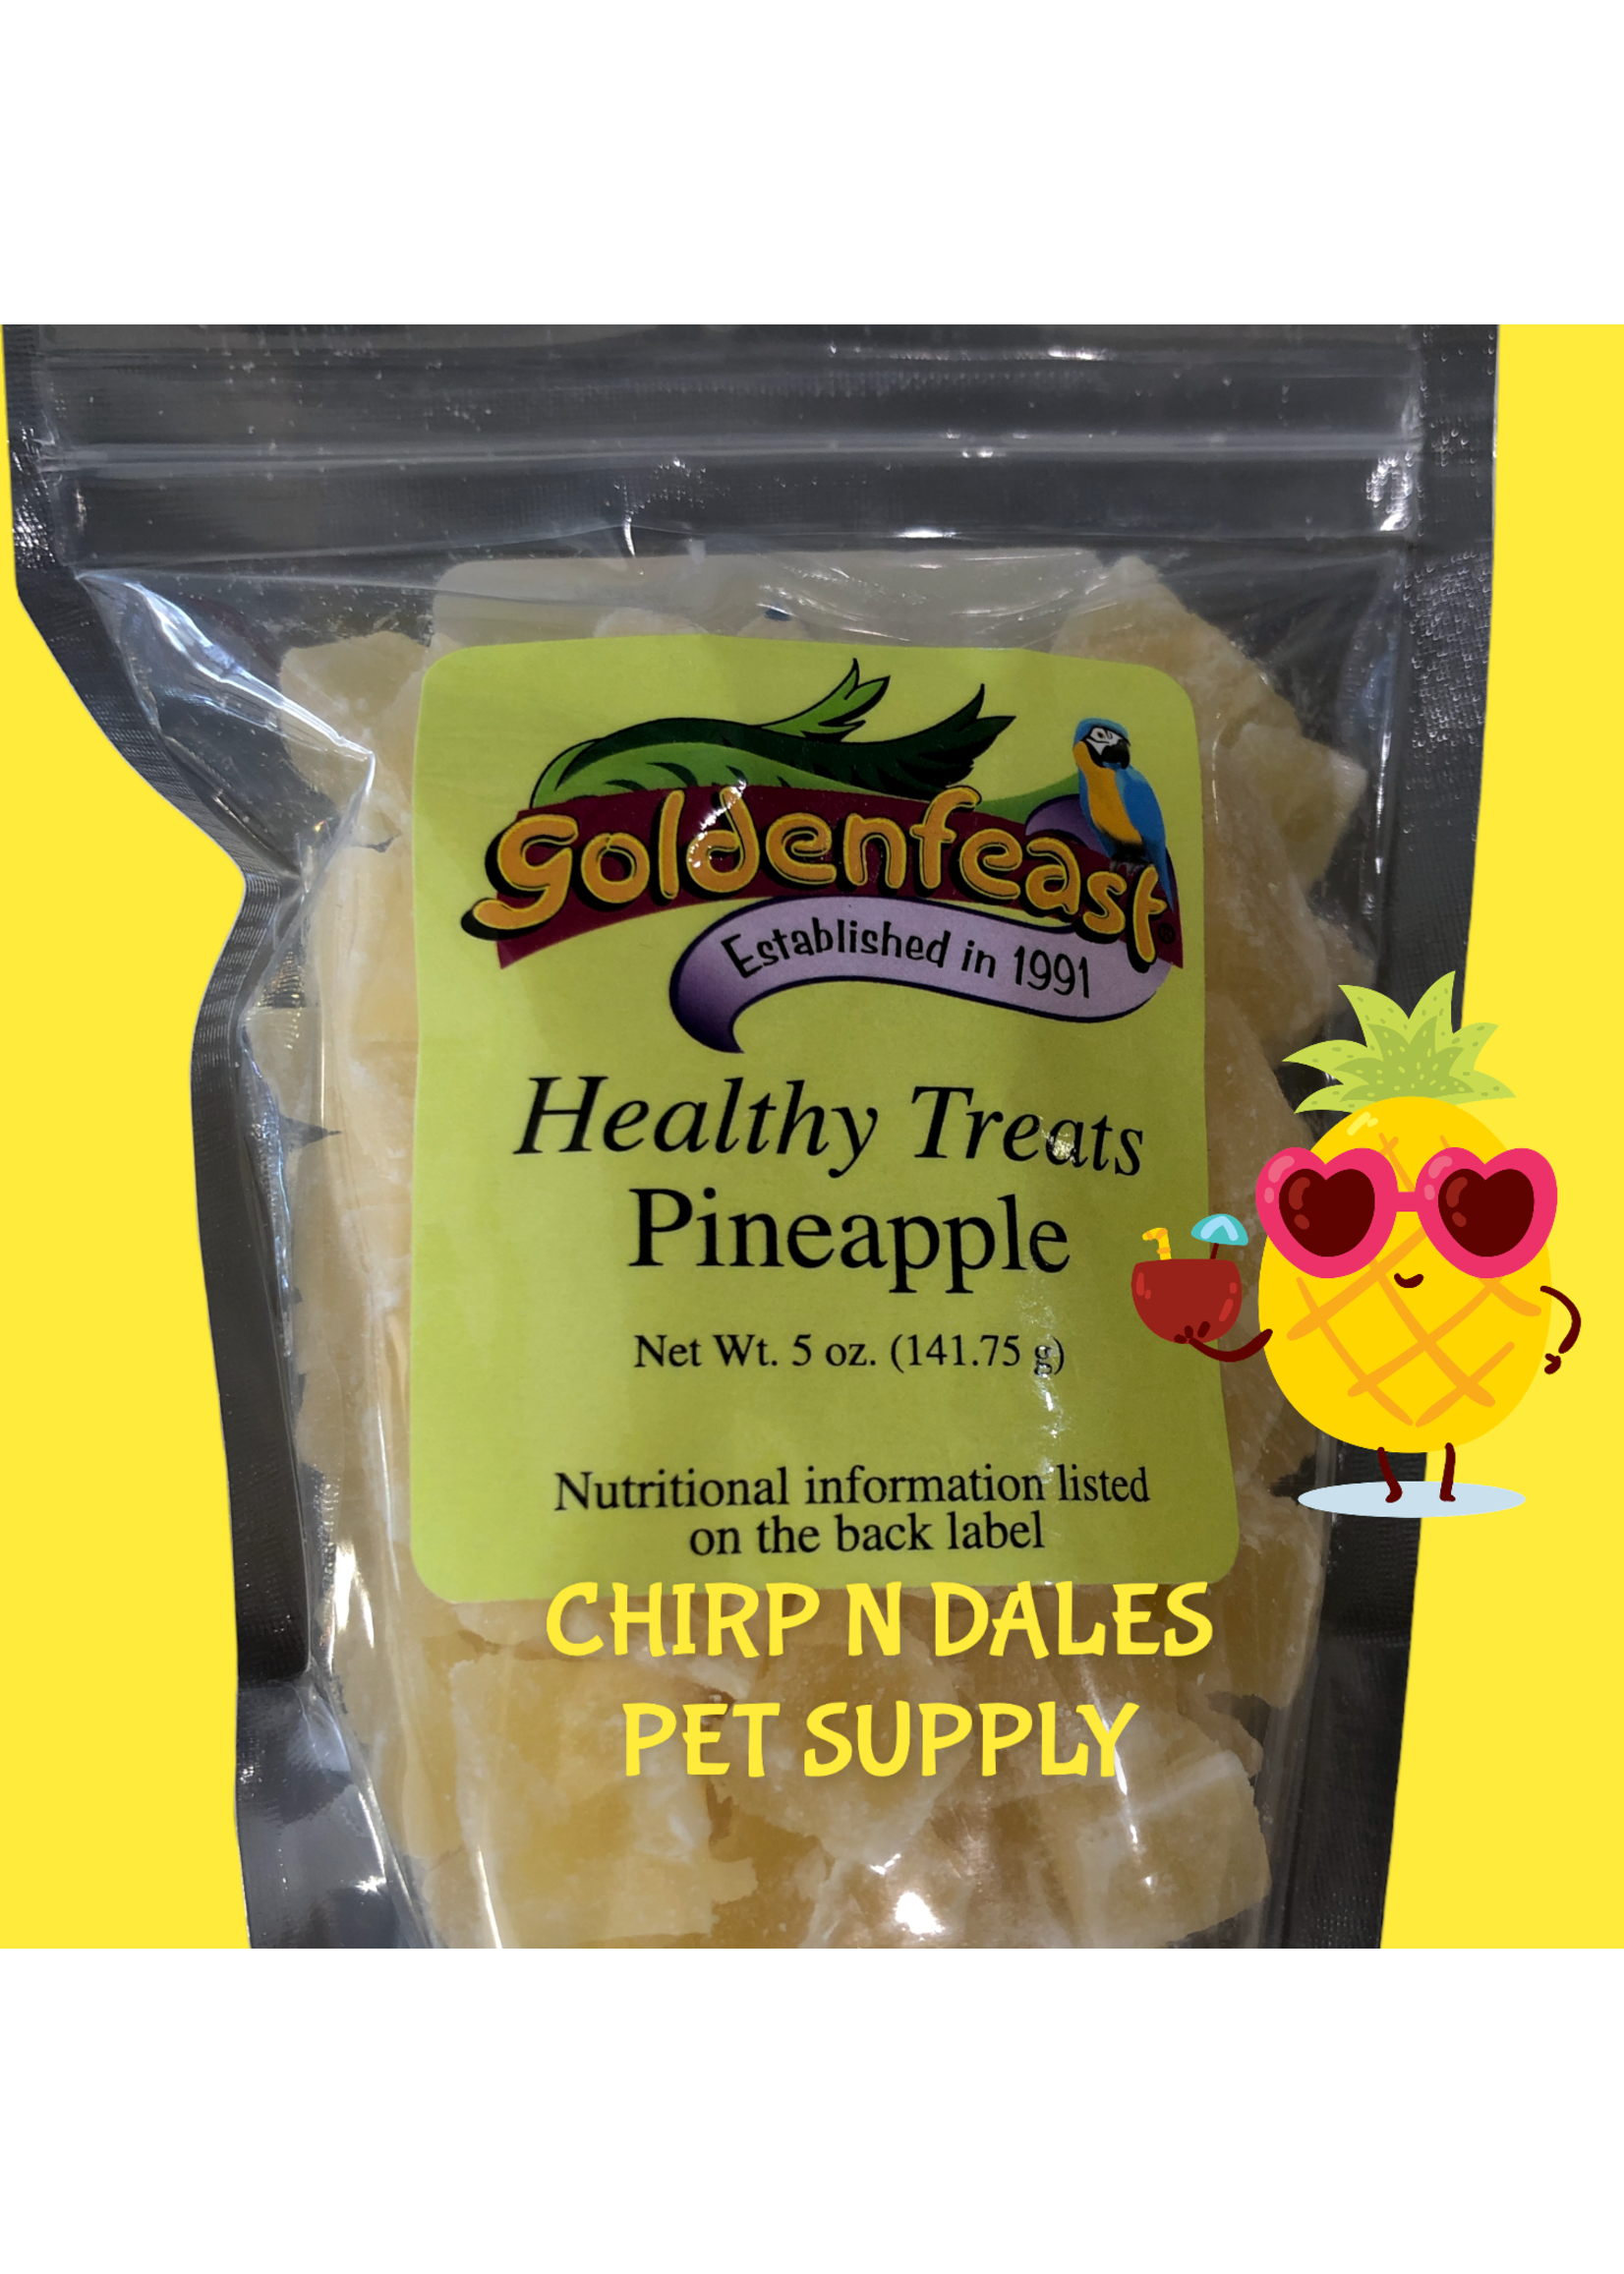 Goldenfeast GF Healthy Treats Pineapple (5oz)